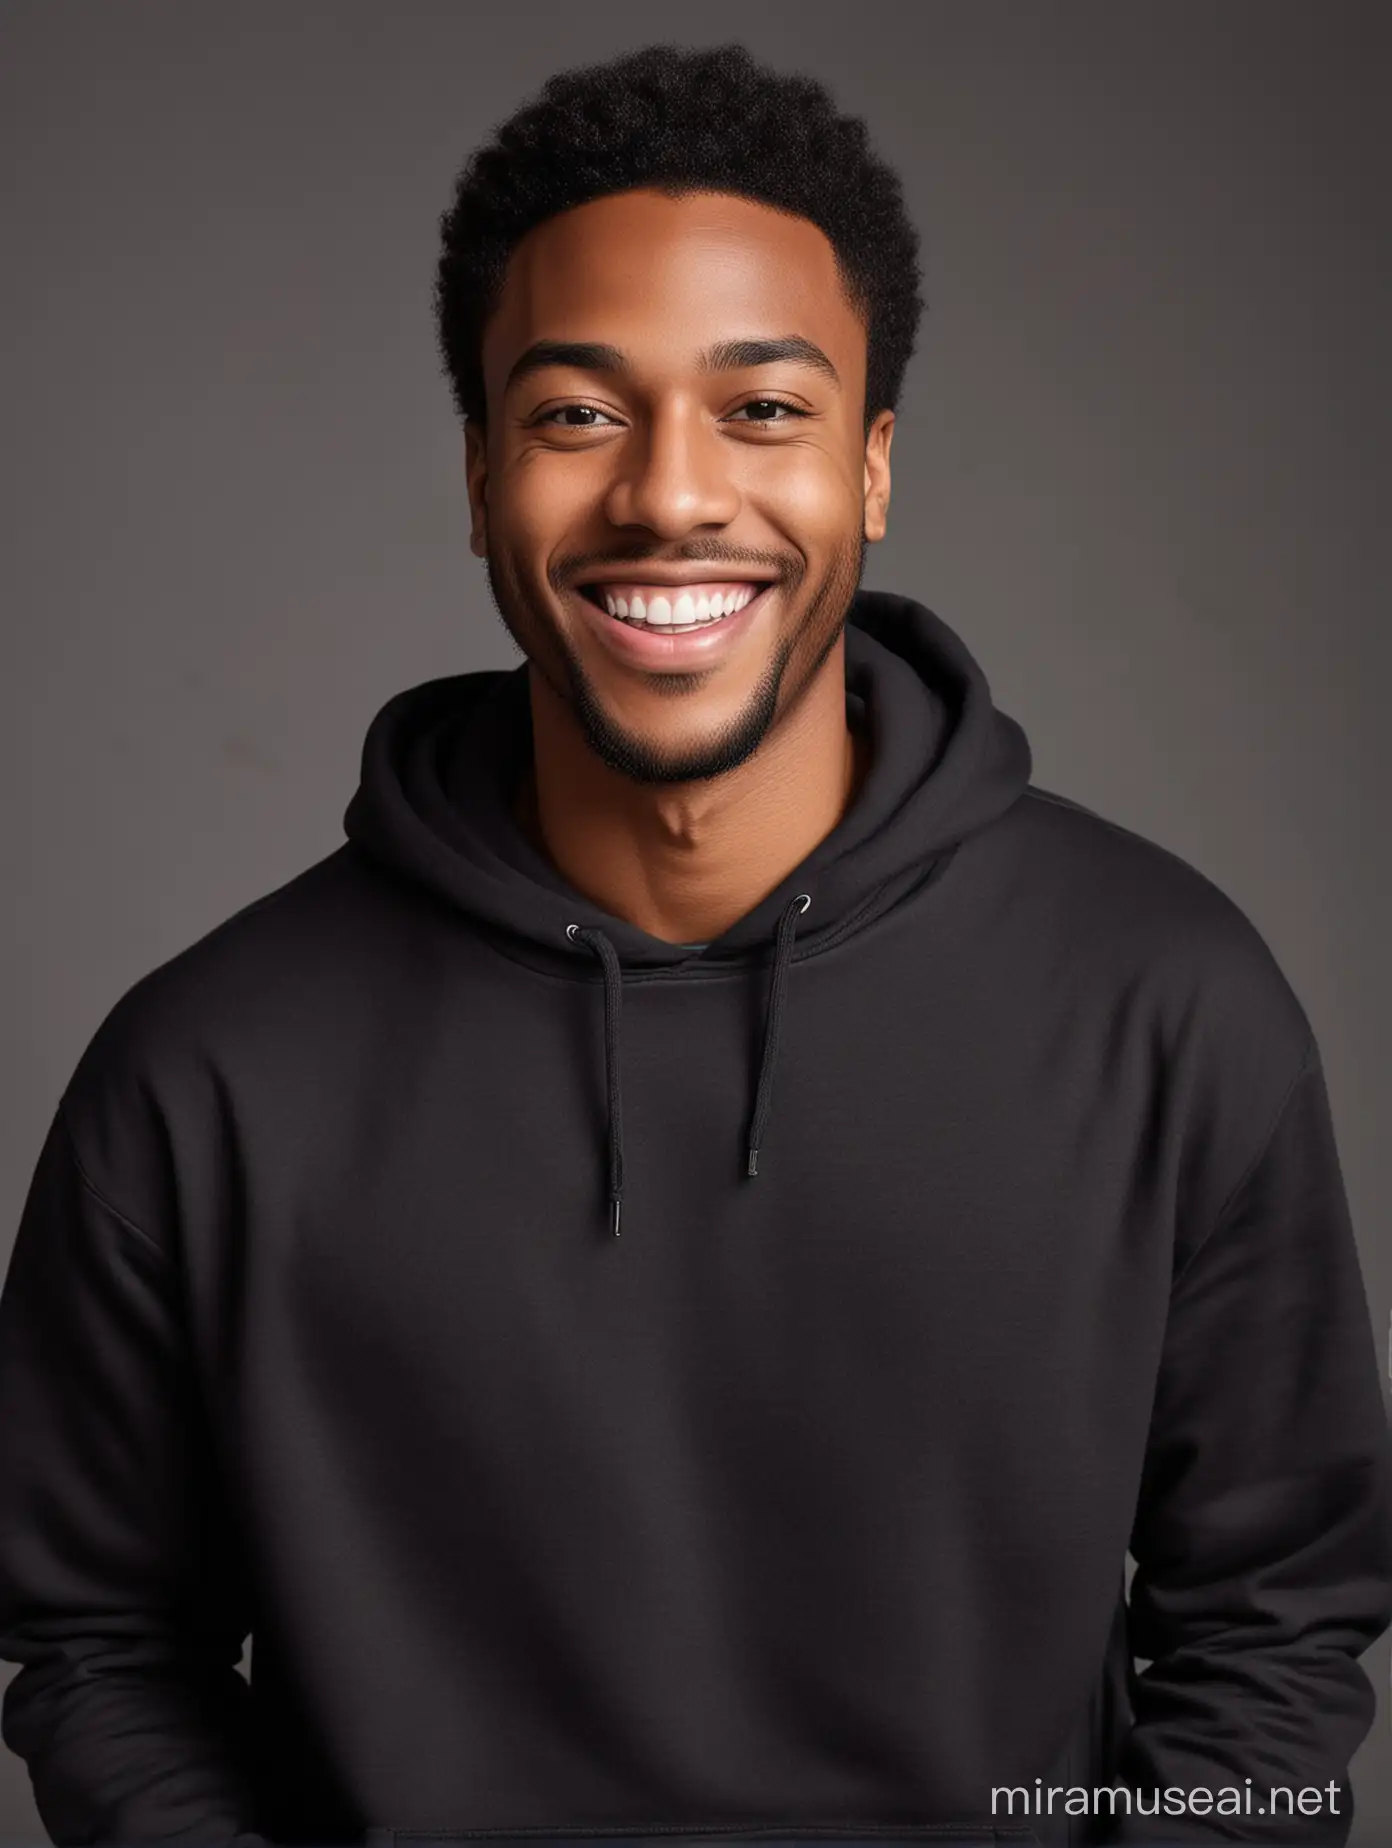 Joyful African American Man Smiling in Black Sweatshirt Portrait